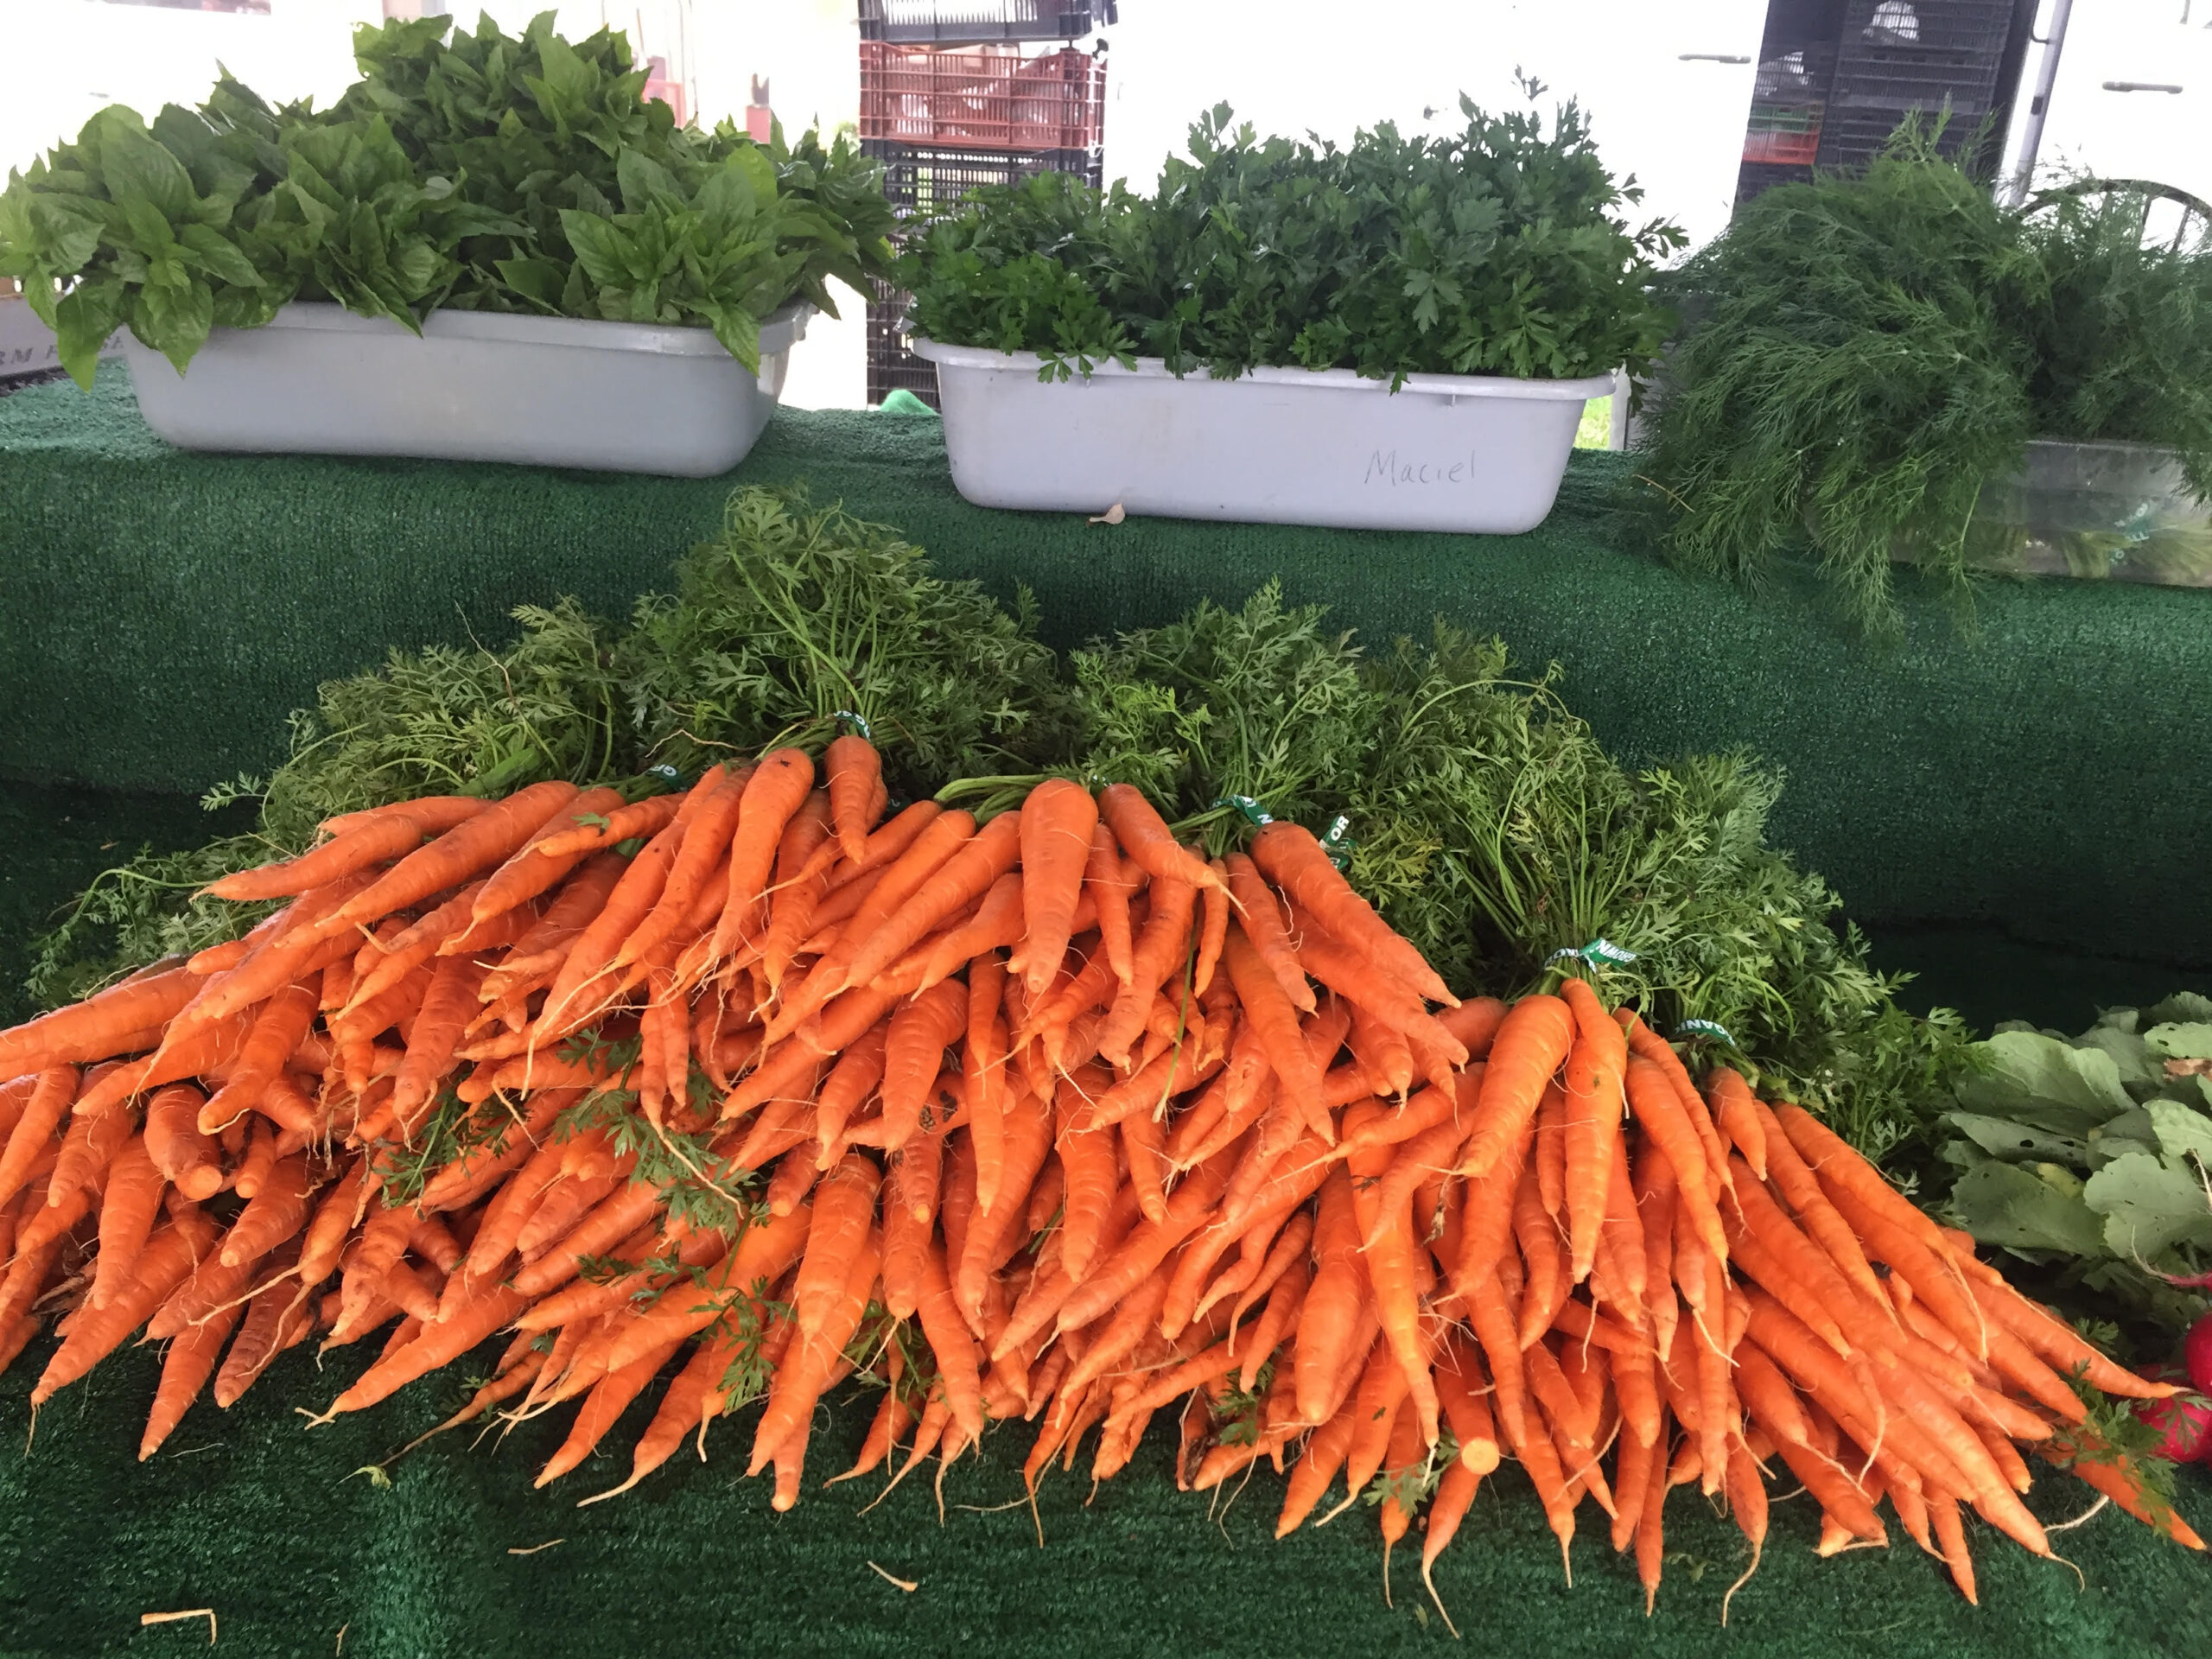 organic carrots